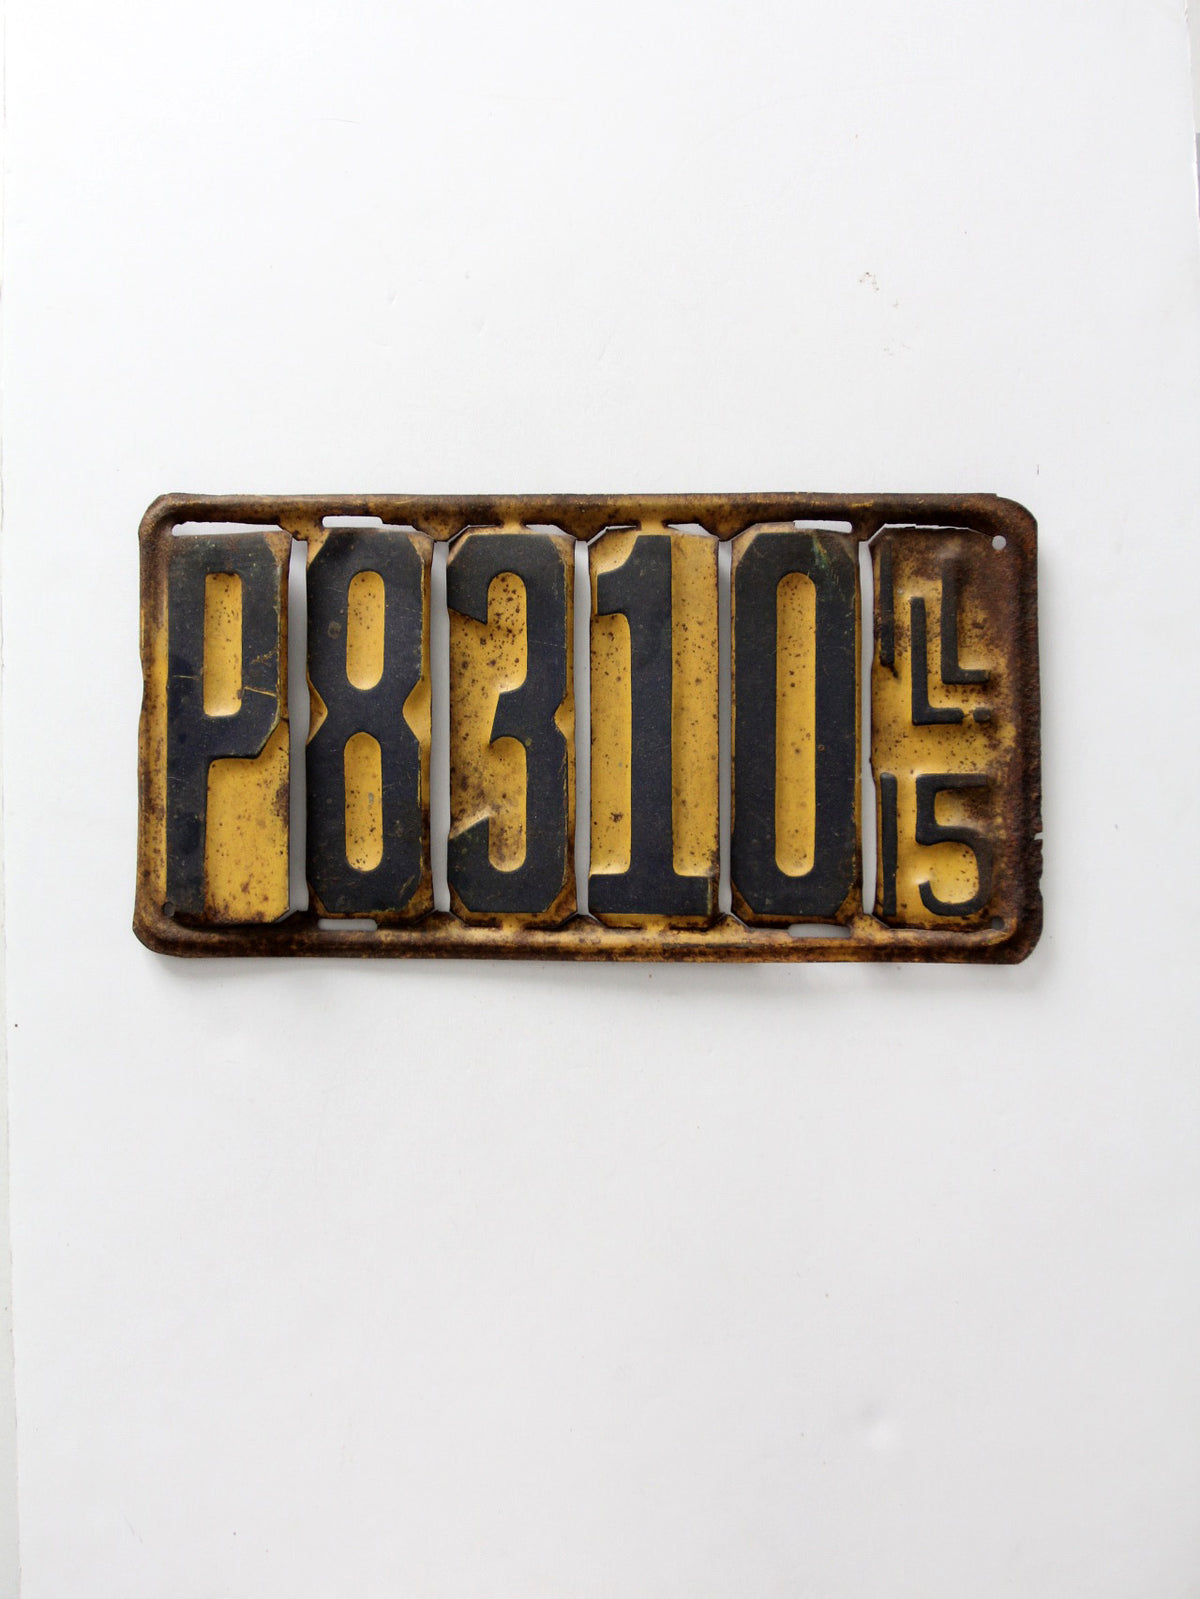 1915 Illinois license plate